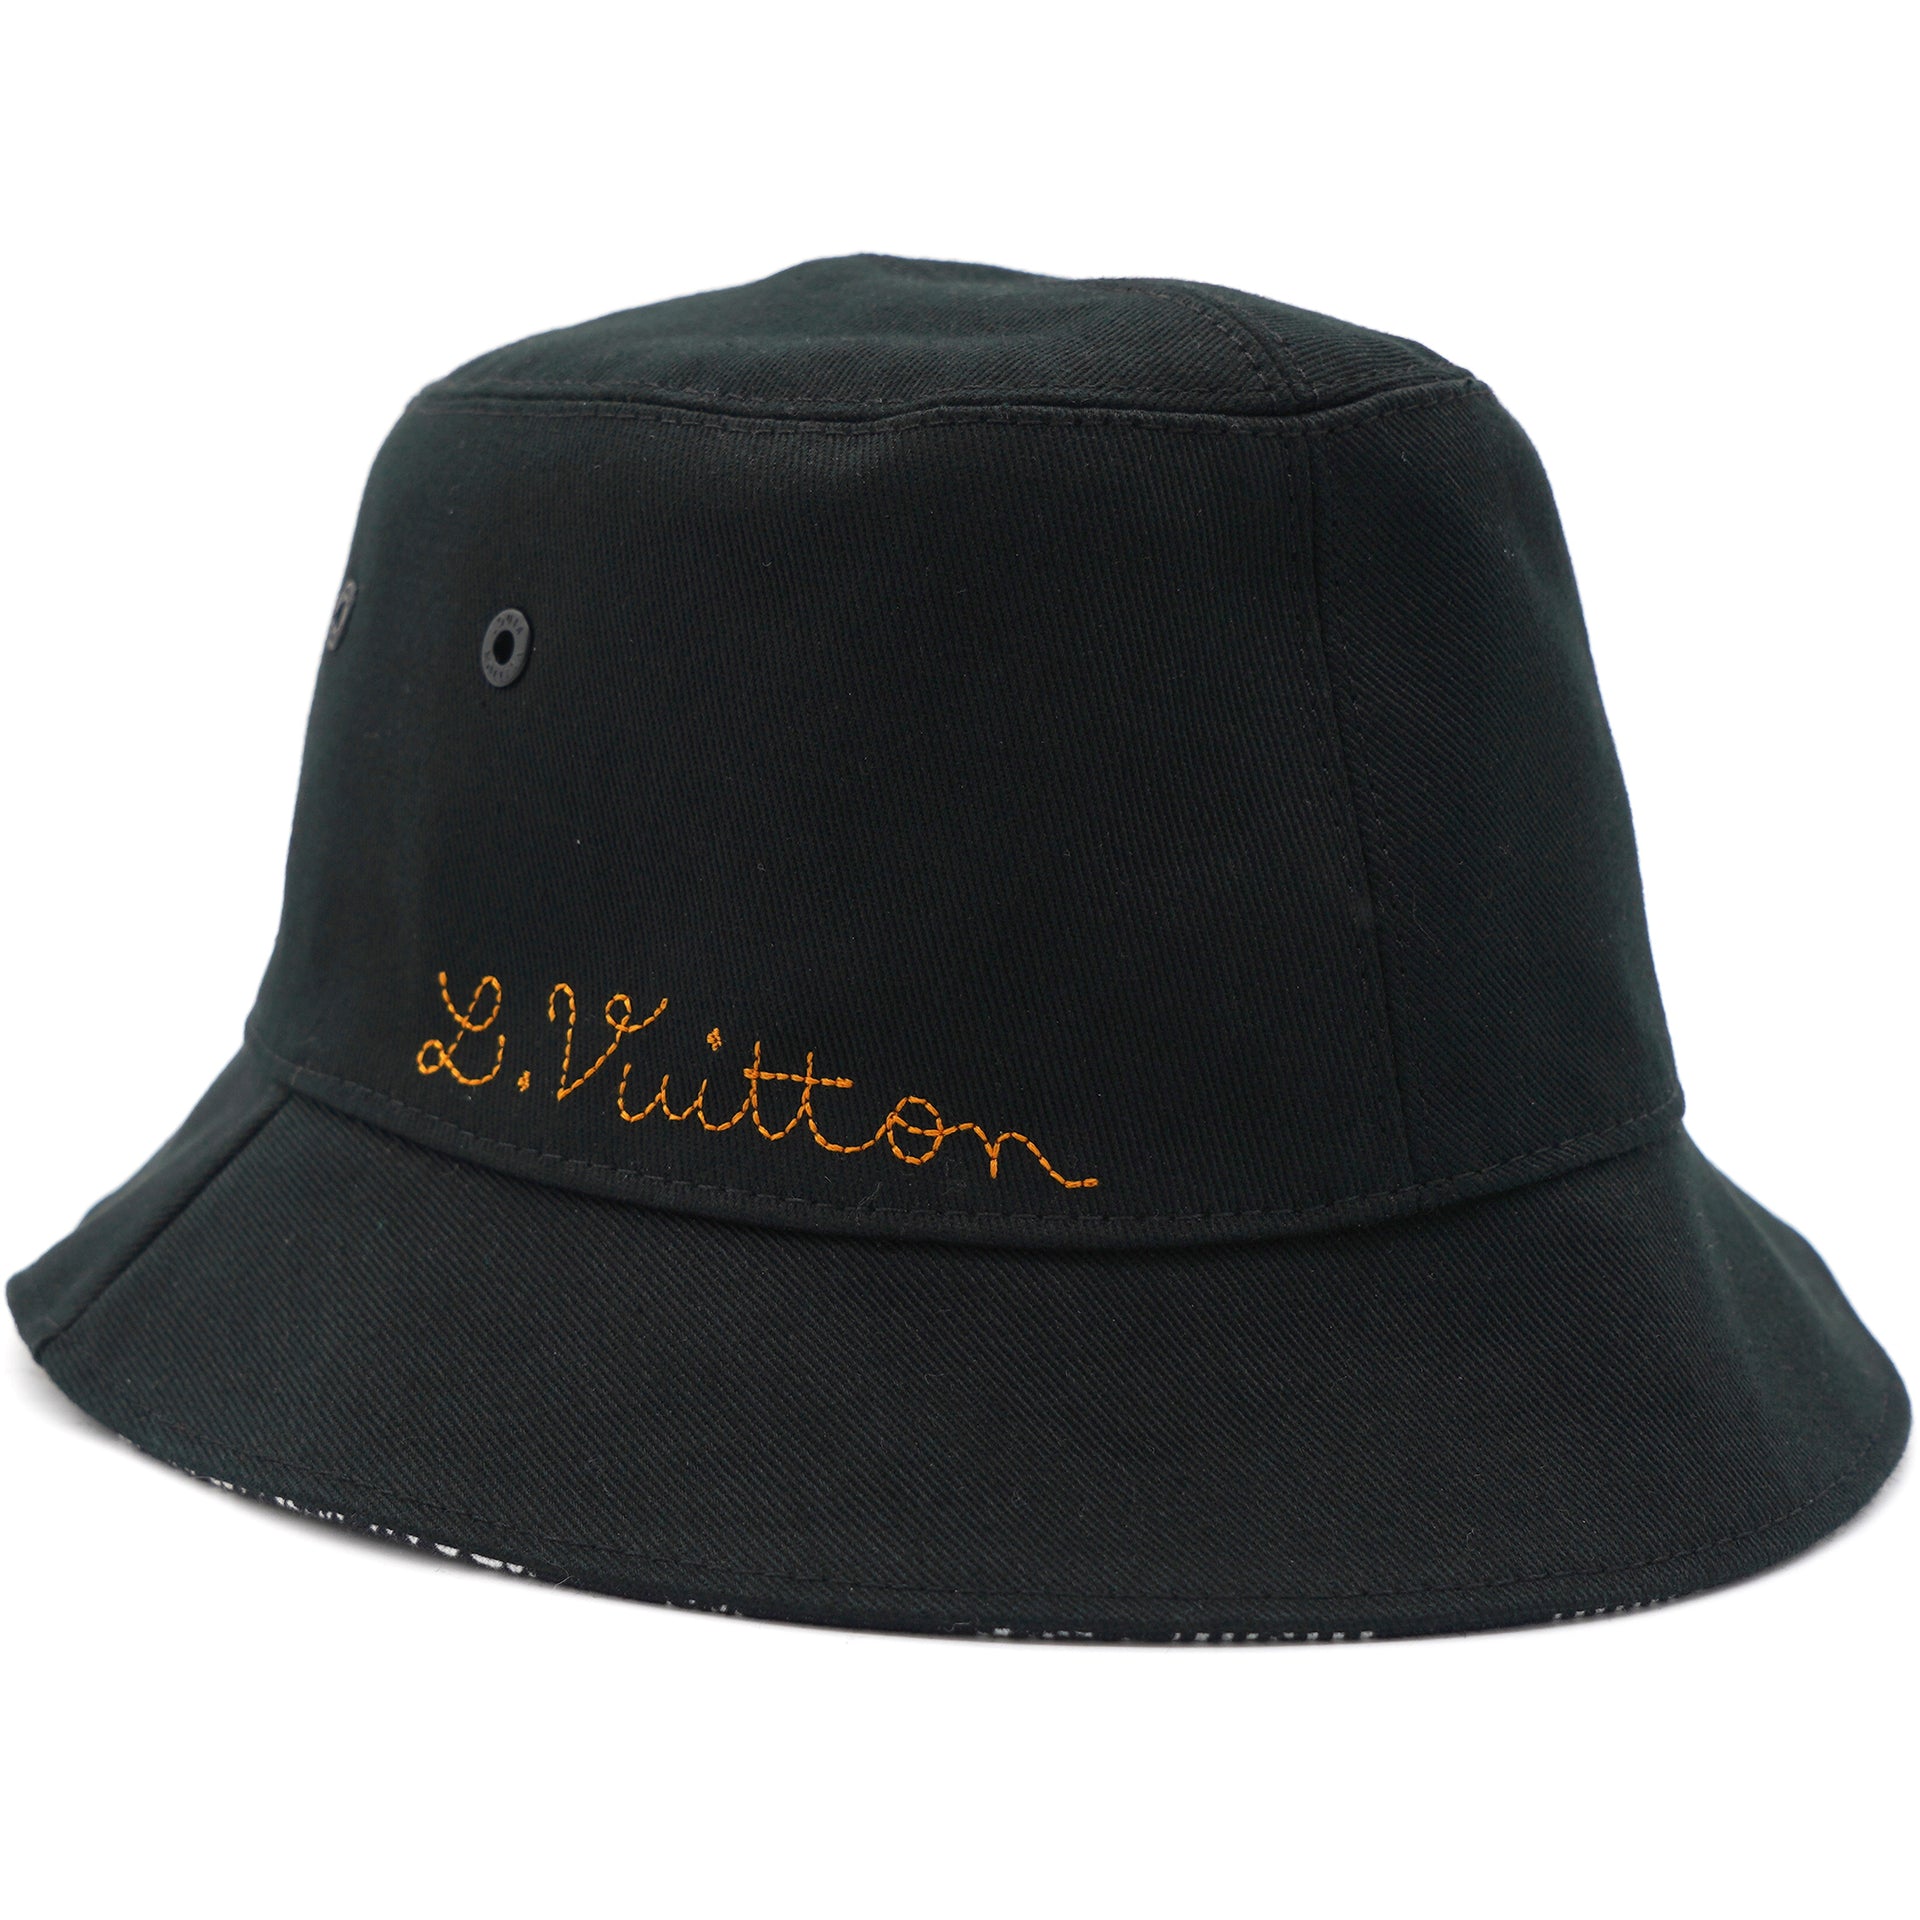 Authentic Louis Vuitton Black x White Distorted Damier Reversible Bucket Hat